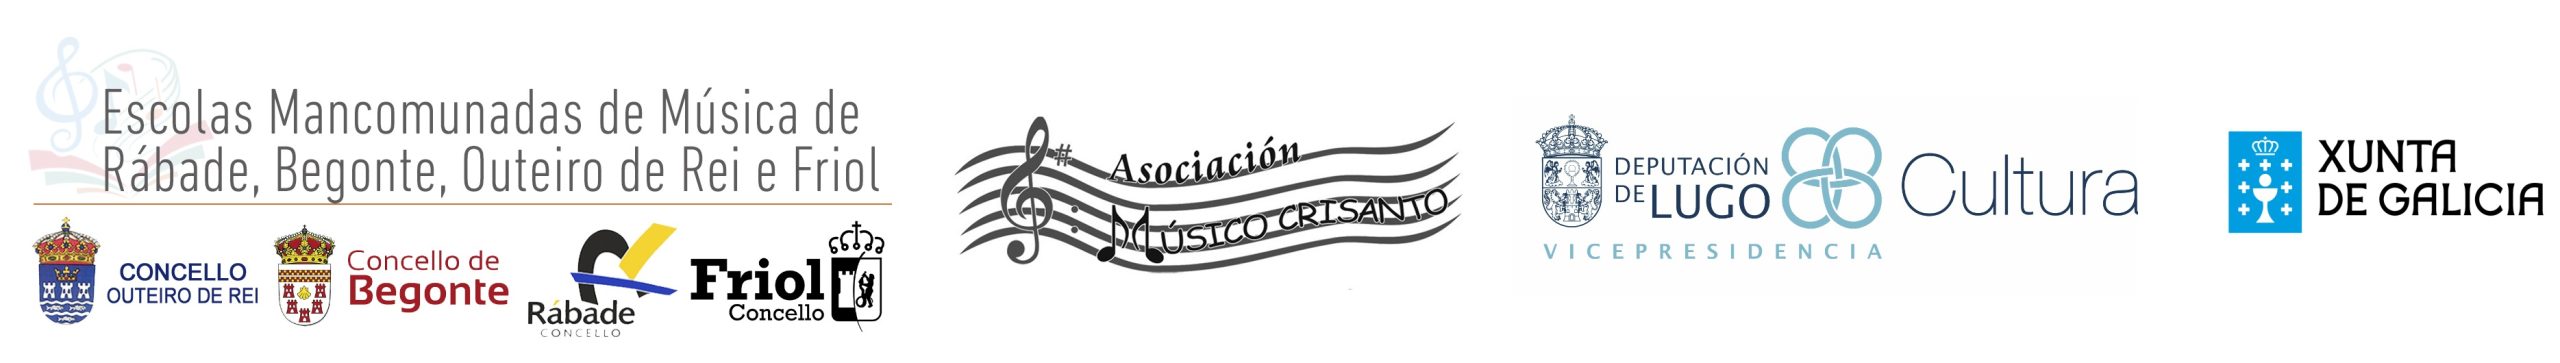 Músico Crisanto| Banda de Música Rábade, Begonte, Outeiro de Rei e Friol